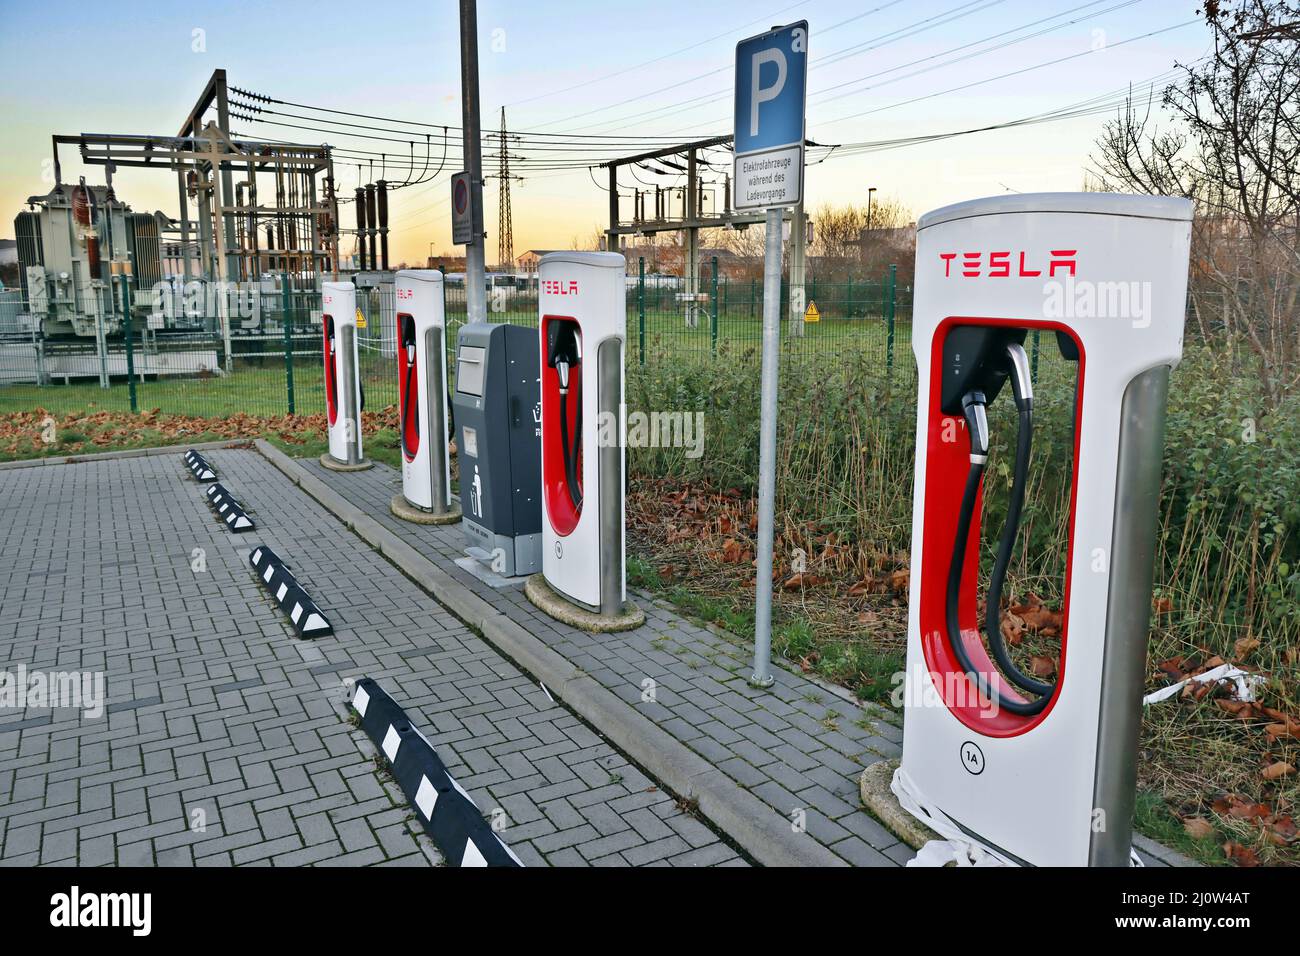 Testla fast charging station Supercharger Stock Photo